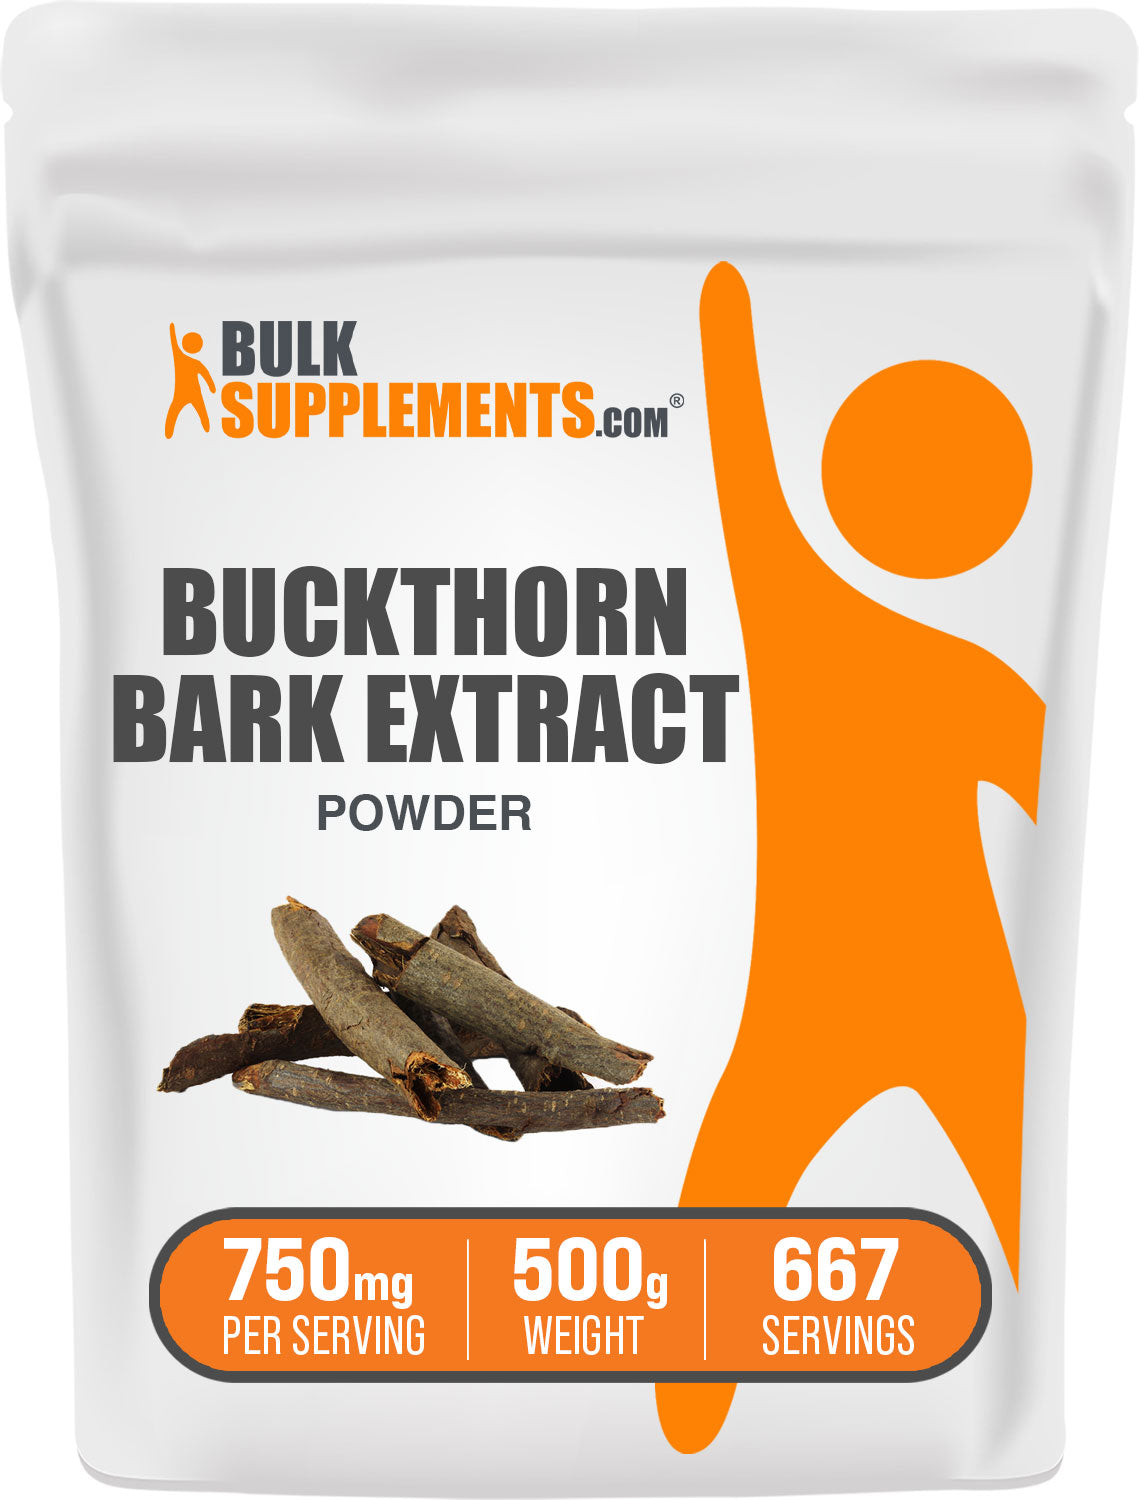 500g of Buckthorn Bark Extract